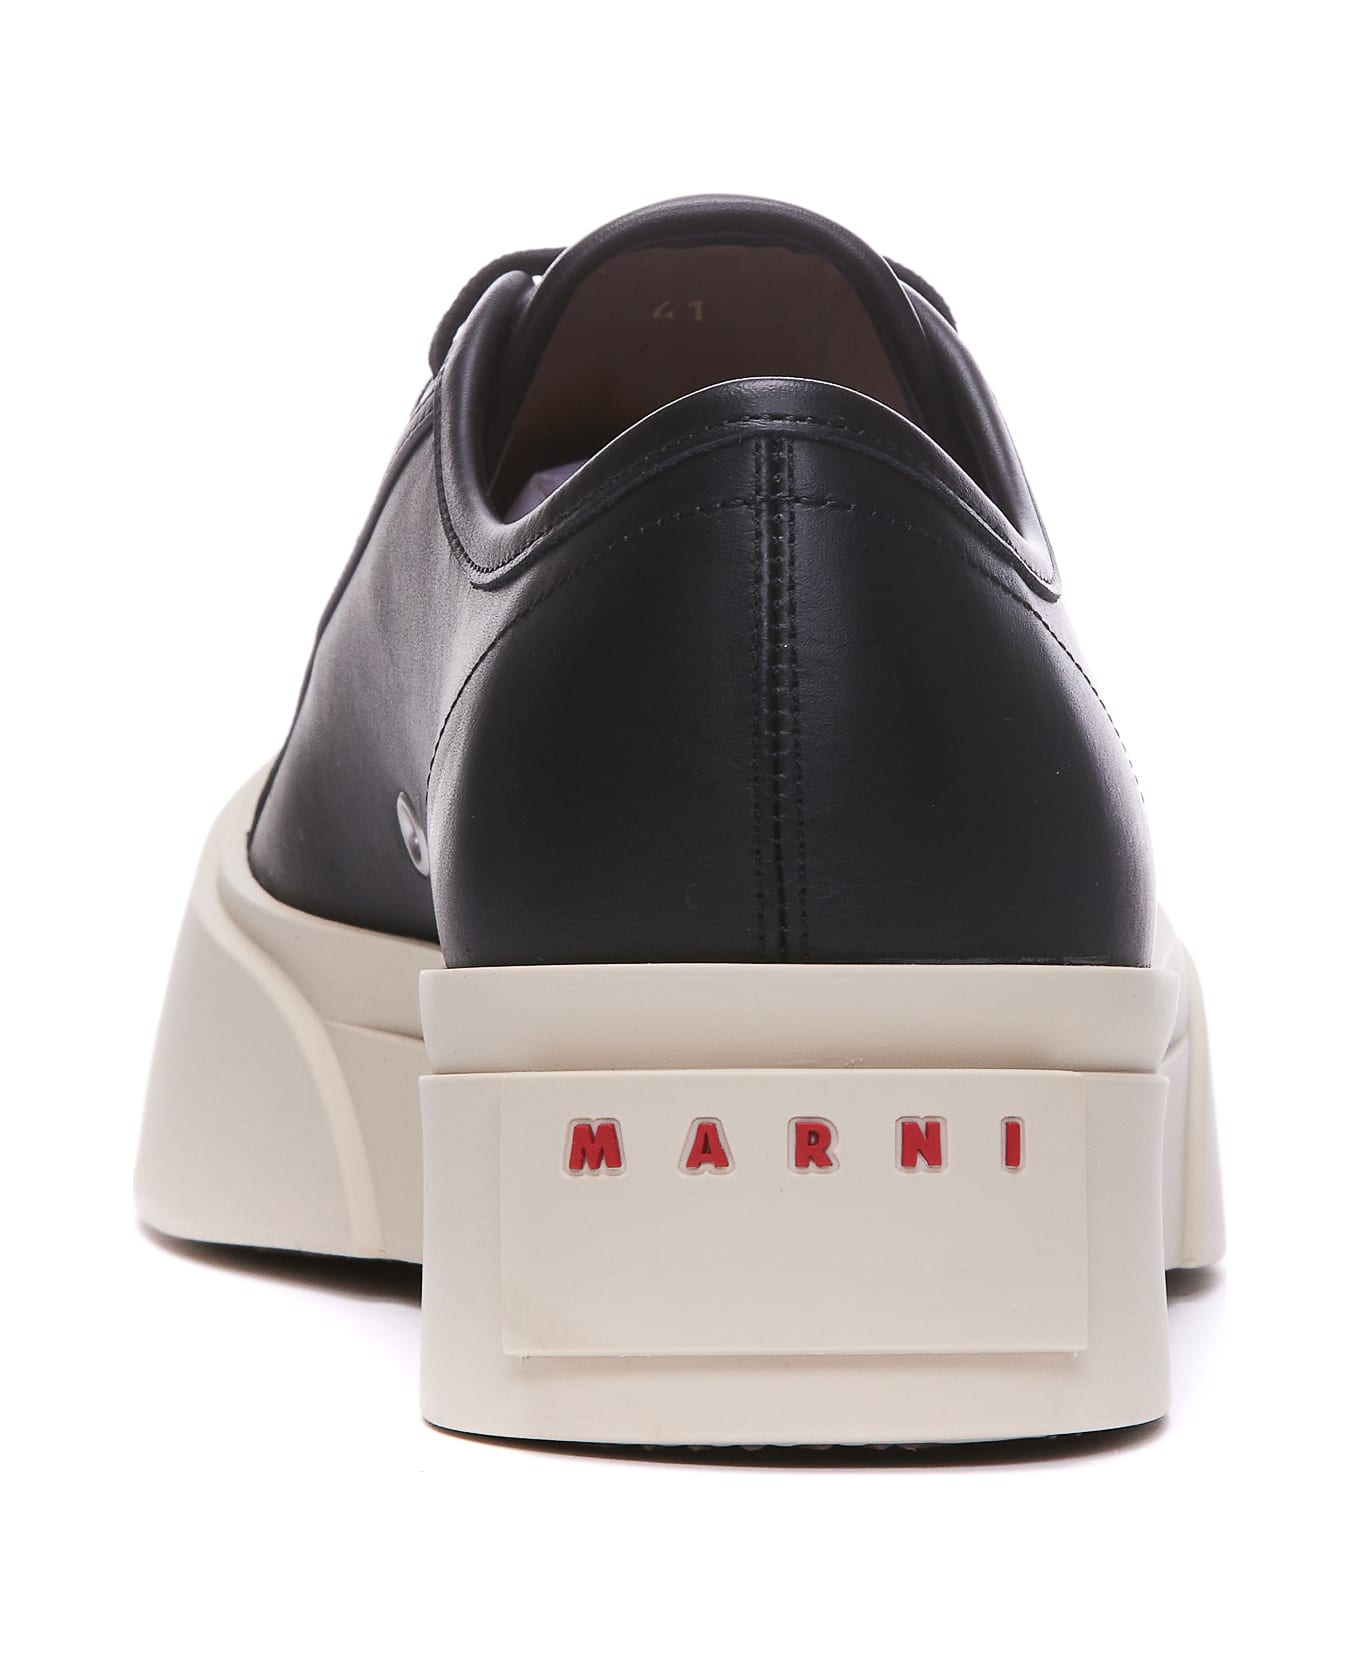 Marni Pablo Sneakers